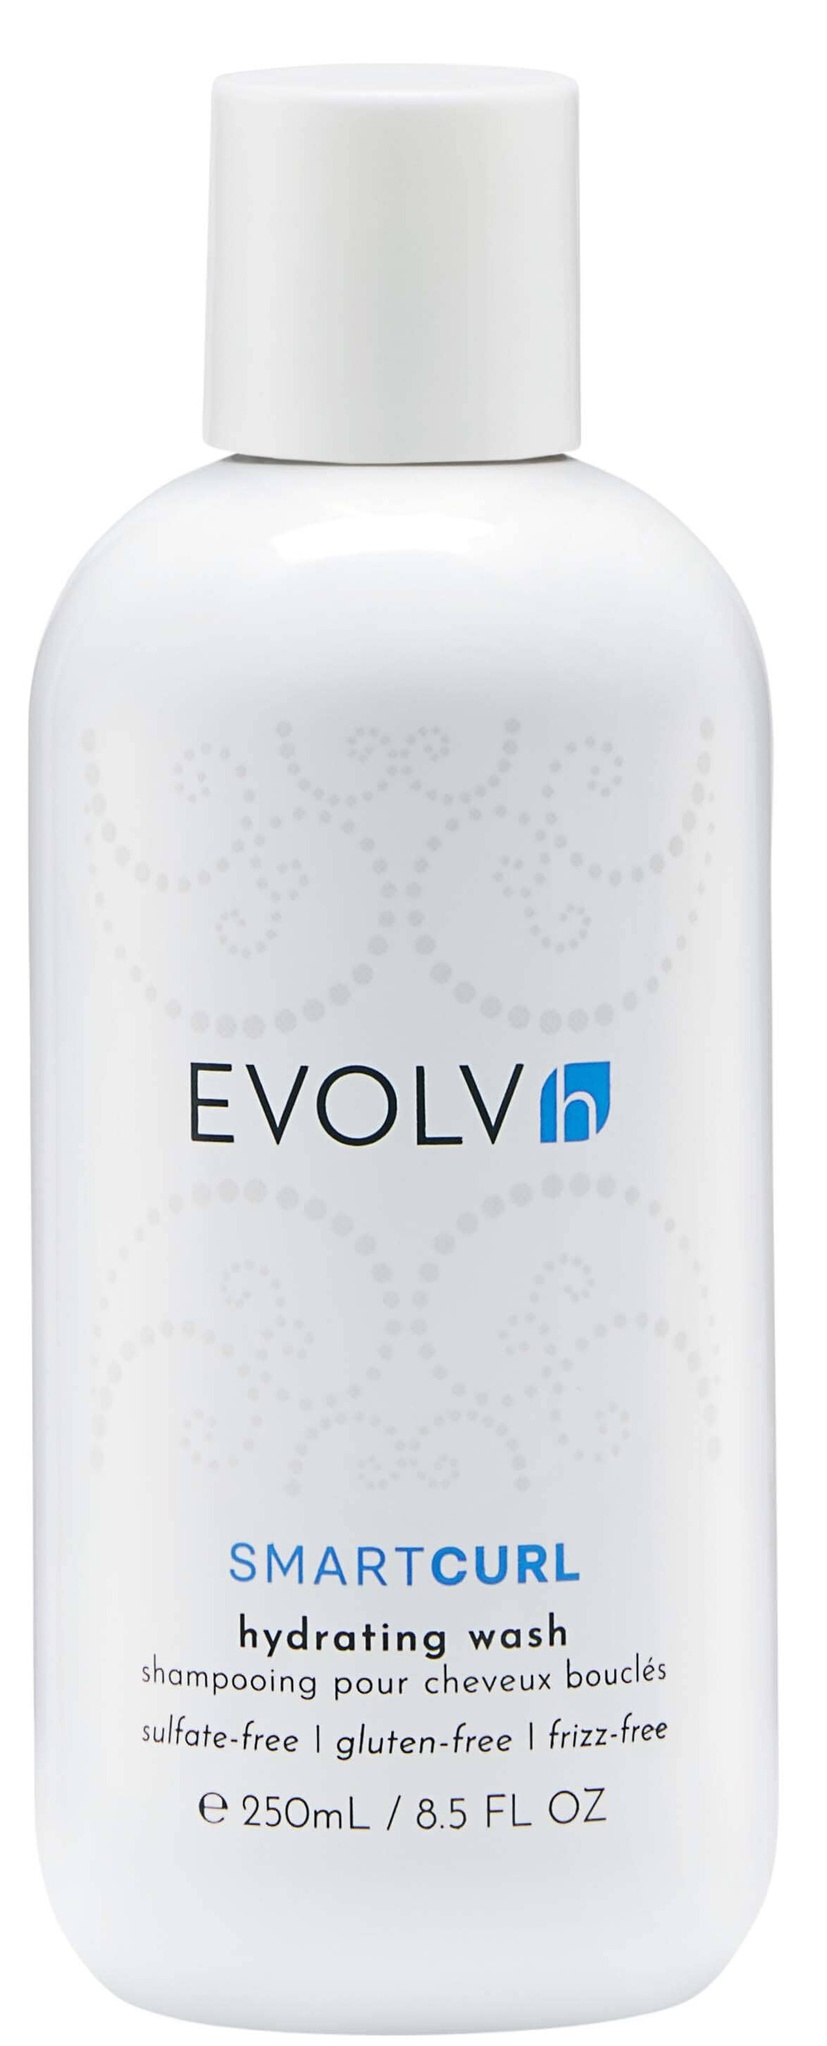 EVOLVh Smartcurl Hydrating Wash